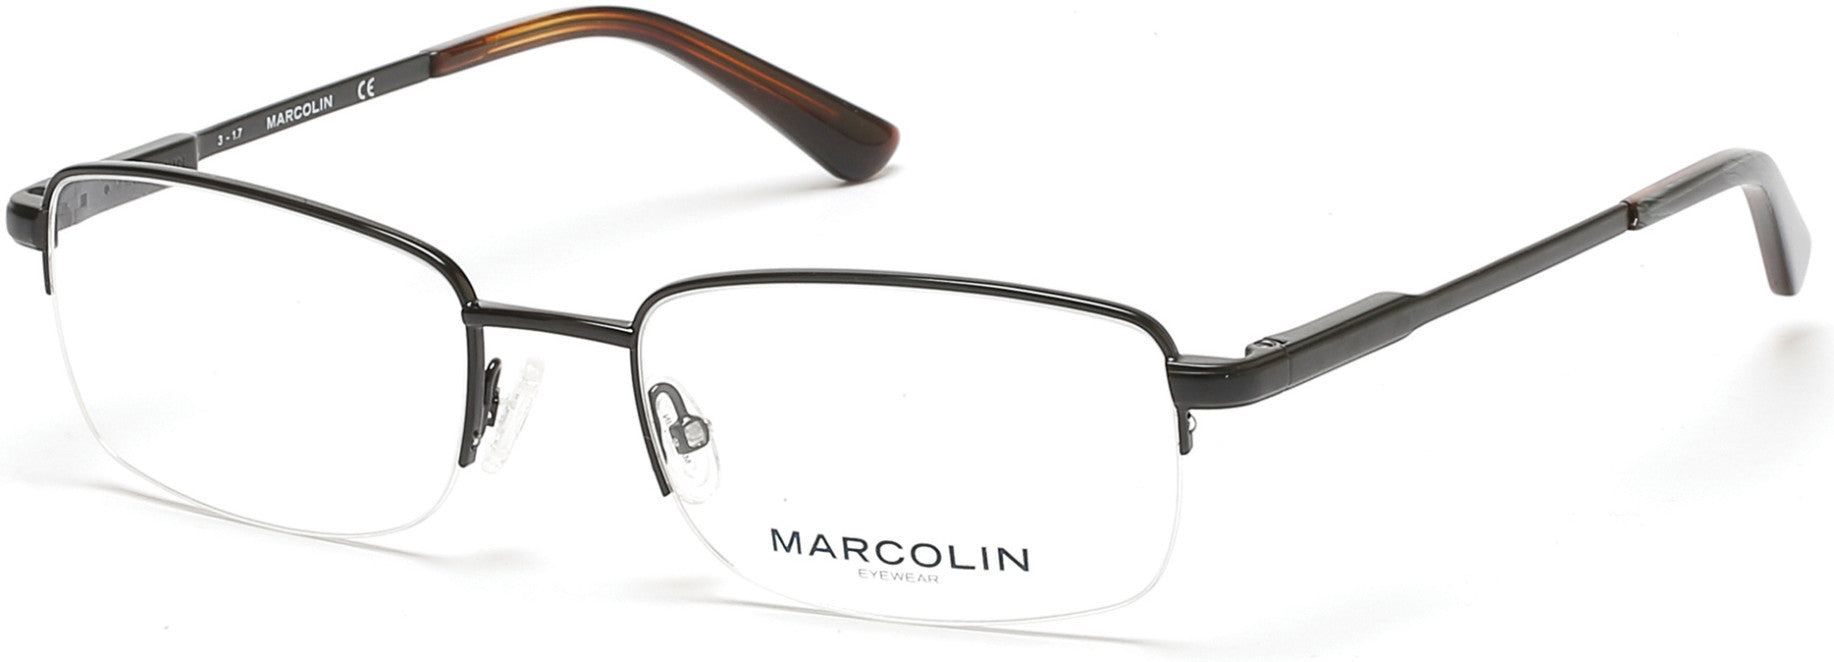 Marcolin MA3002 Eyeglasses 032-001 - Shiny Black